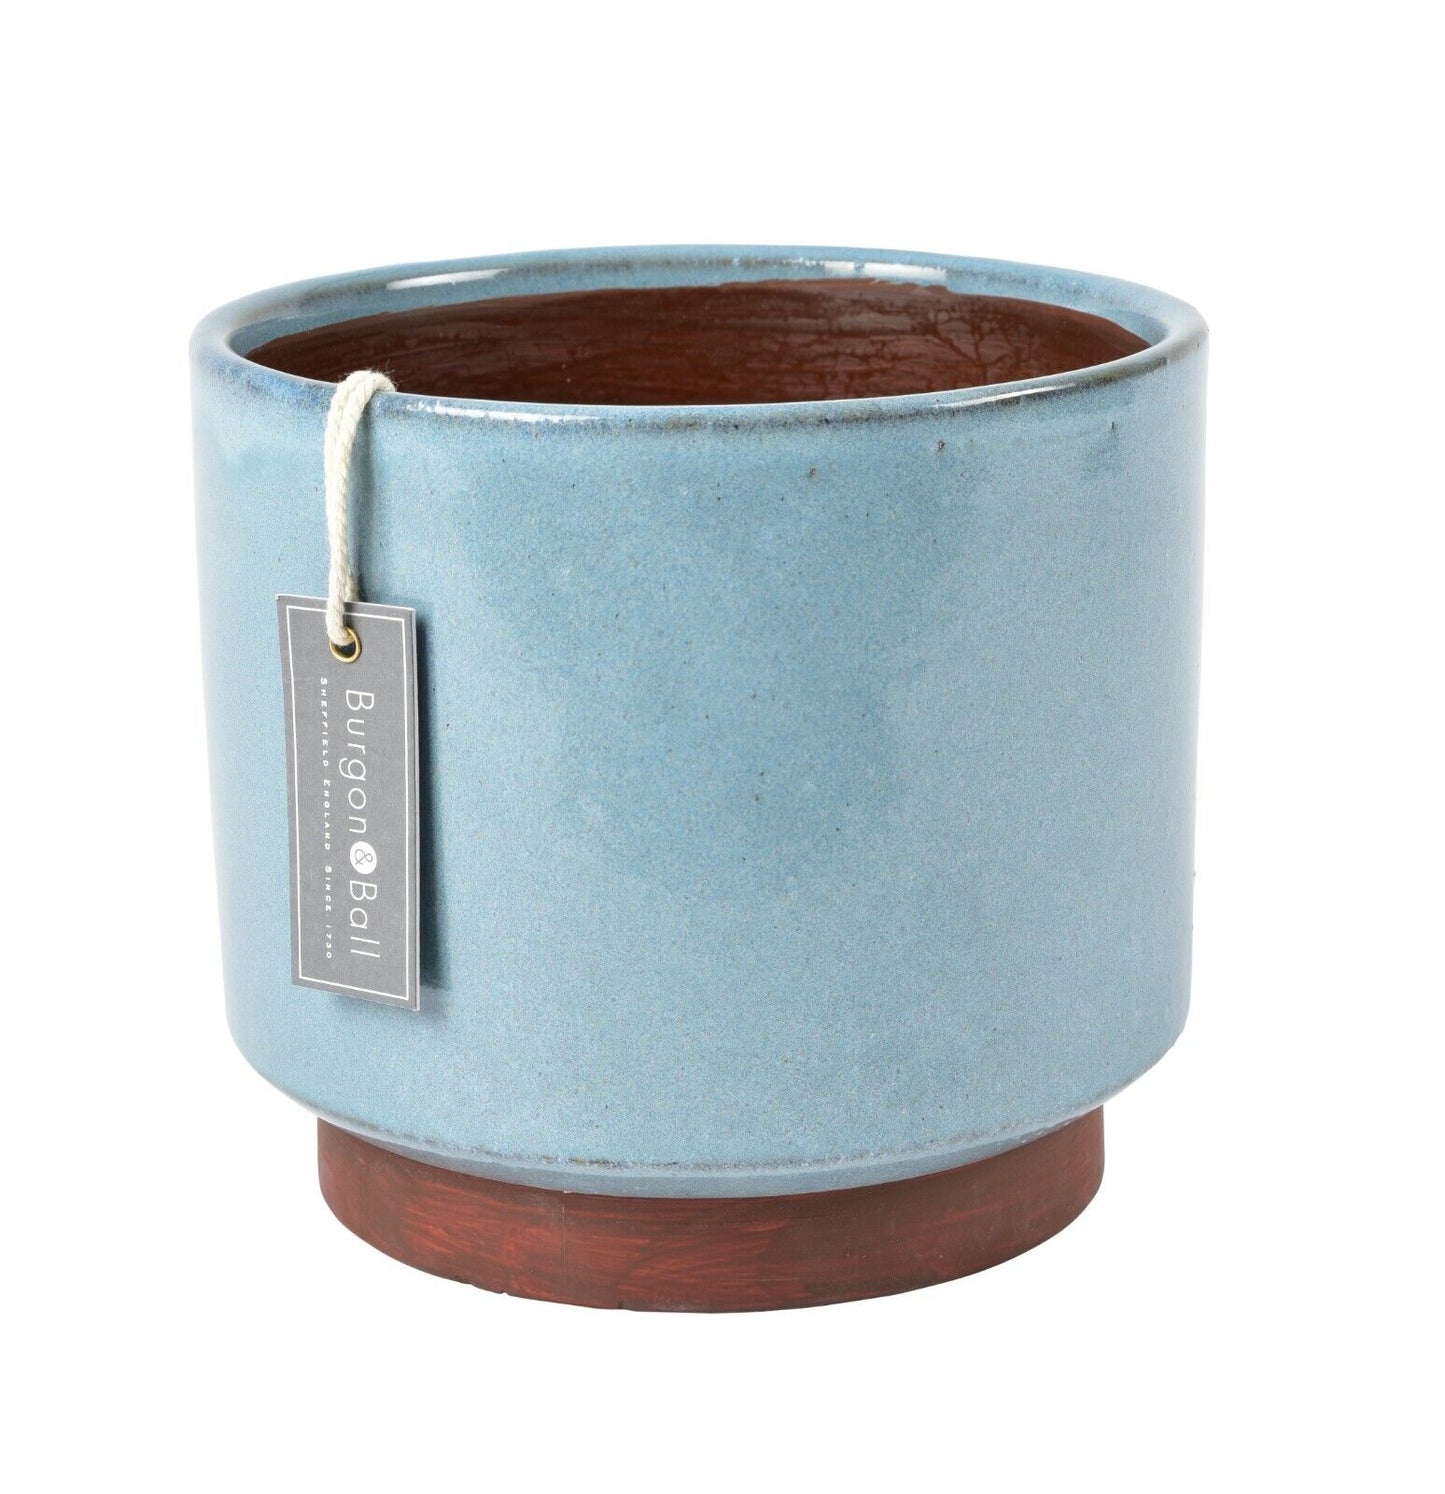 Malibu Blue, Green or Cream Glazed Pots by Burgon & Ball